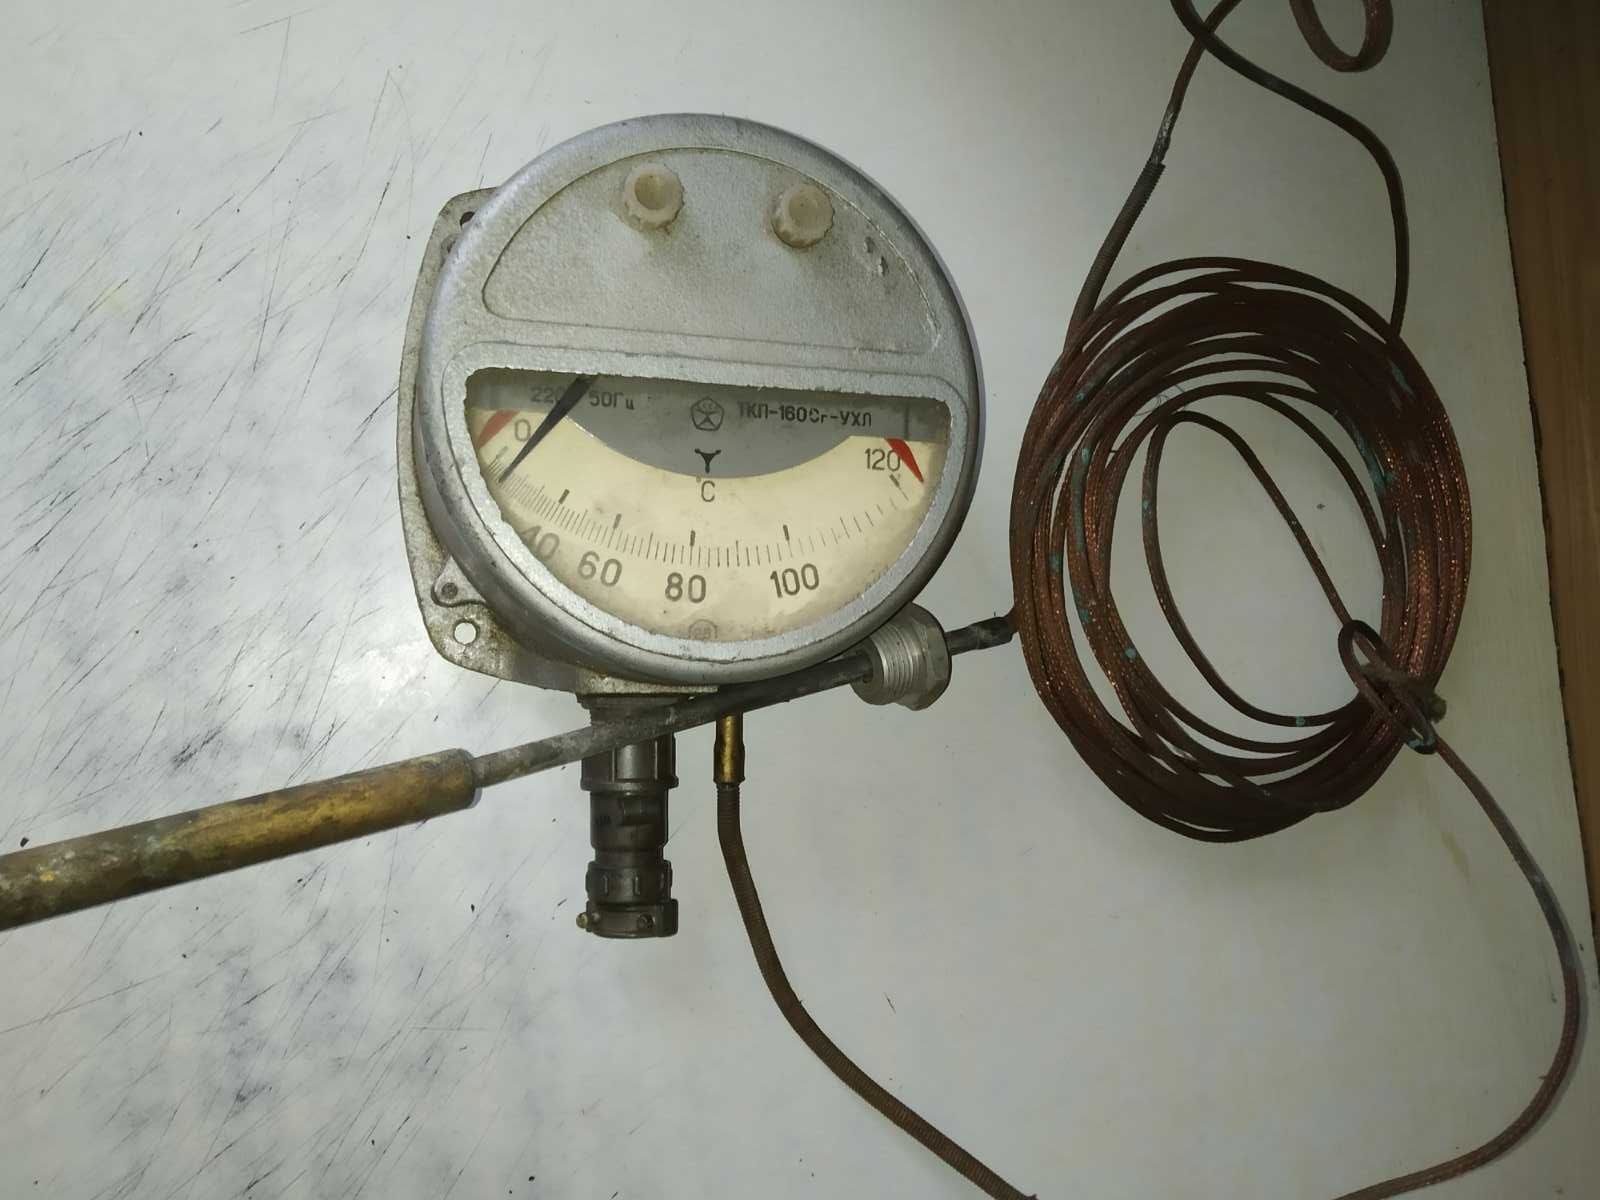 ТКП-160 Сг-УХЛ Термометр манометричний